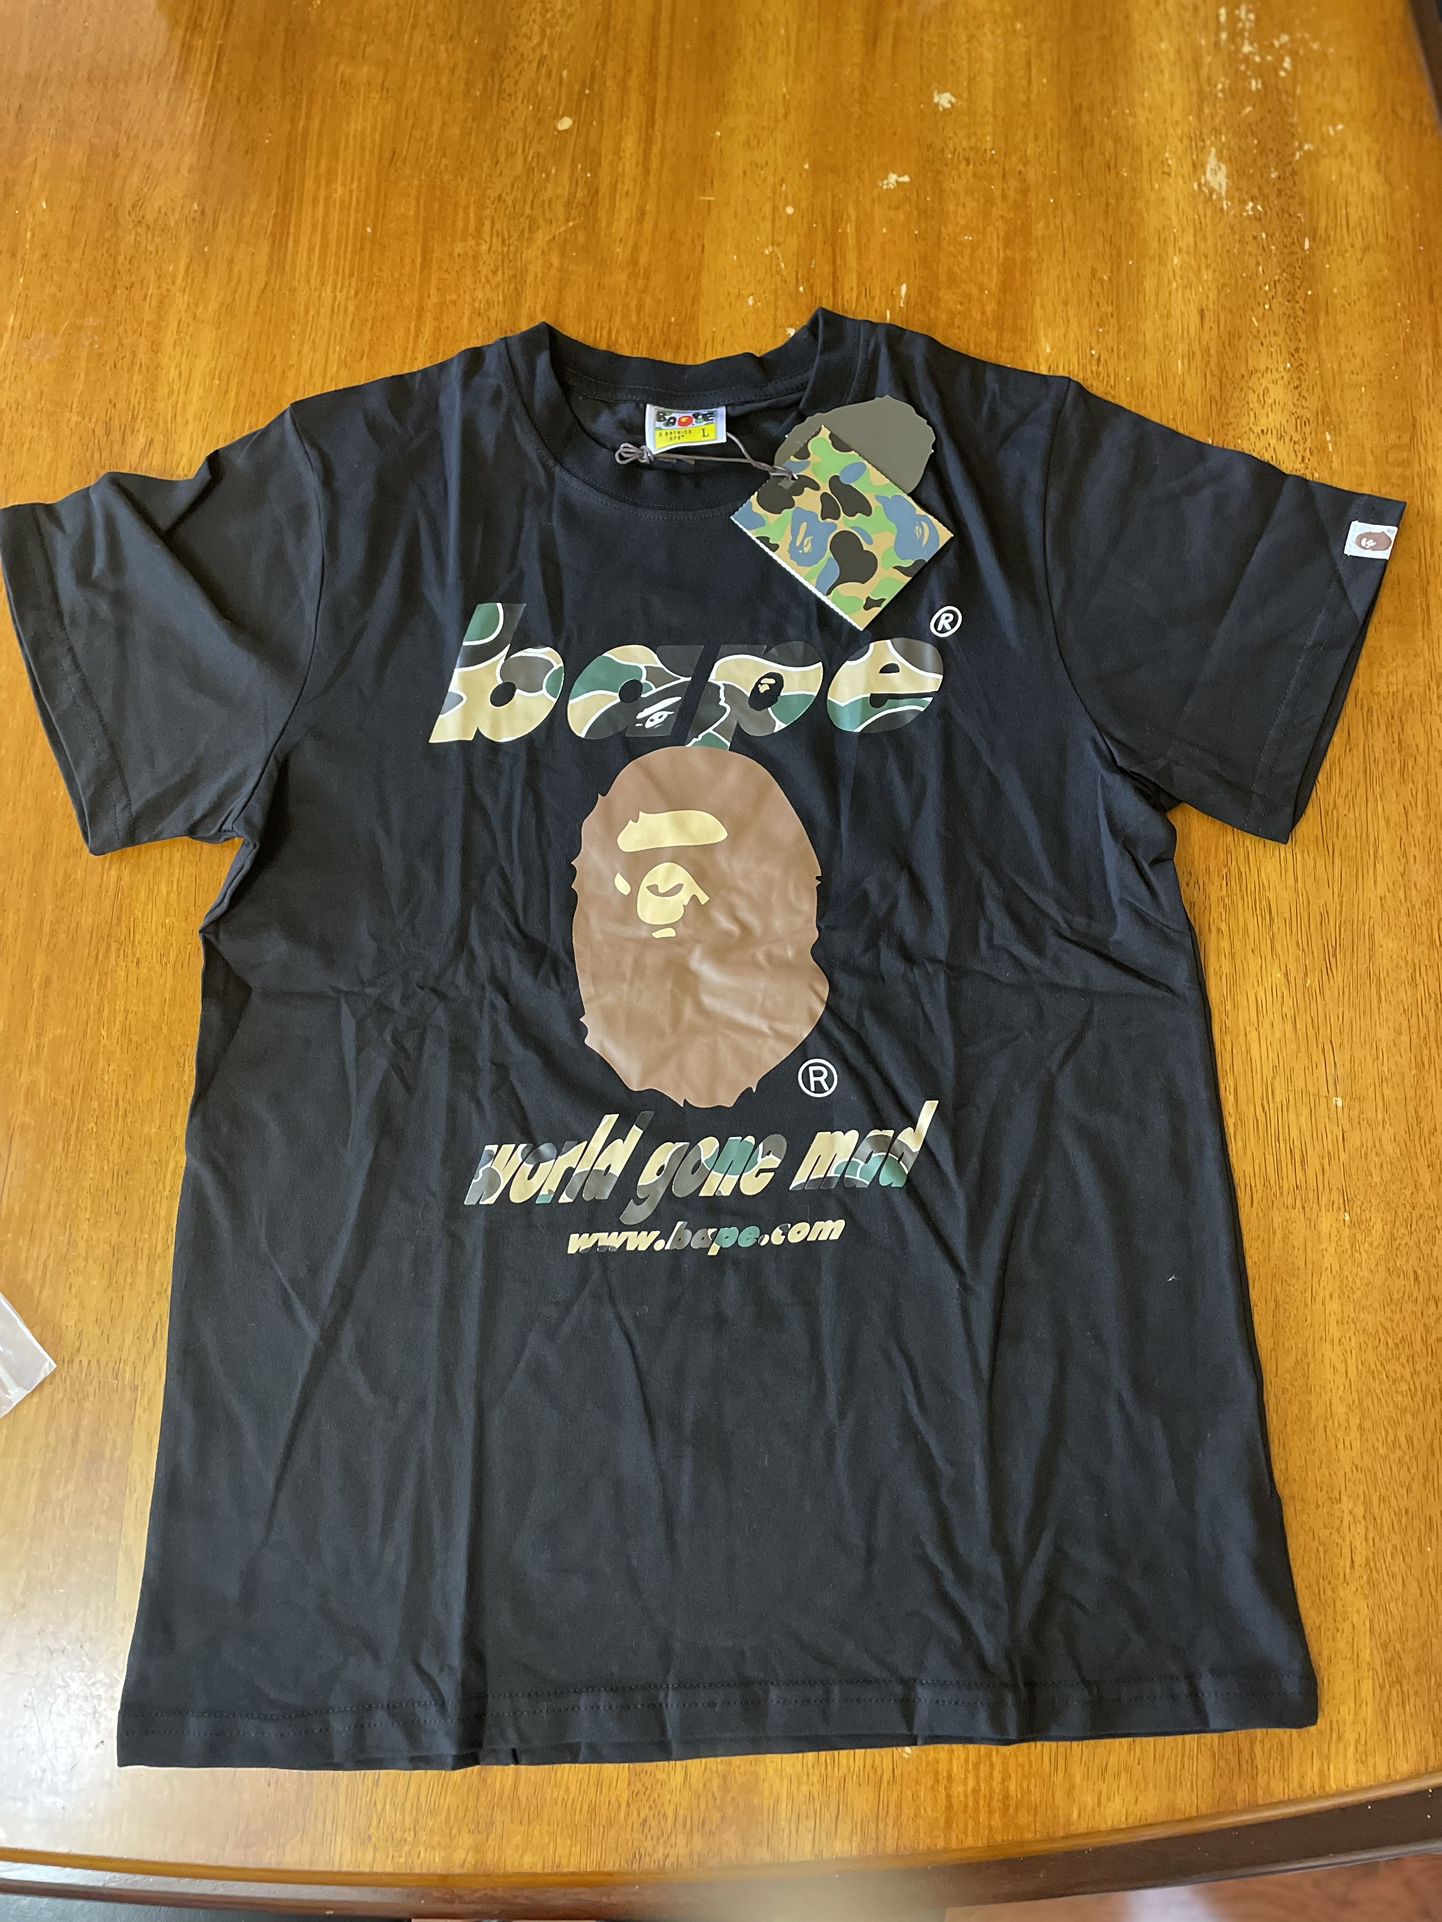 BAPE T Shirt Medium $60